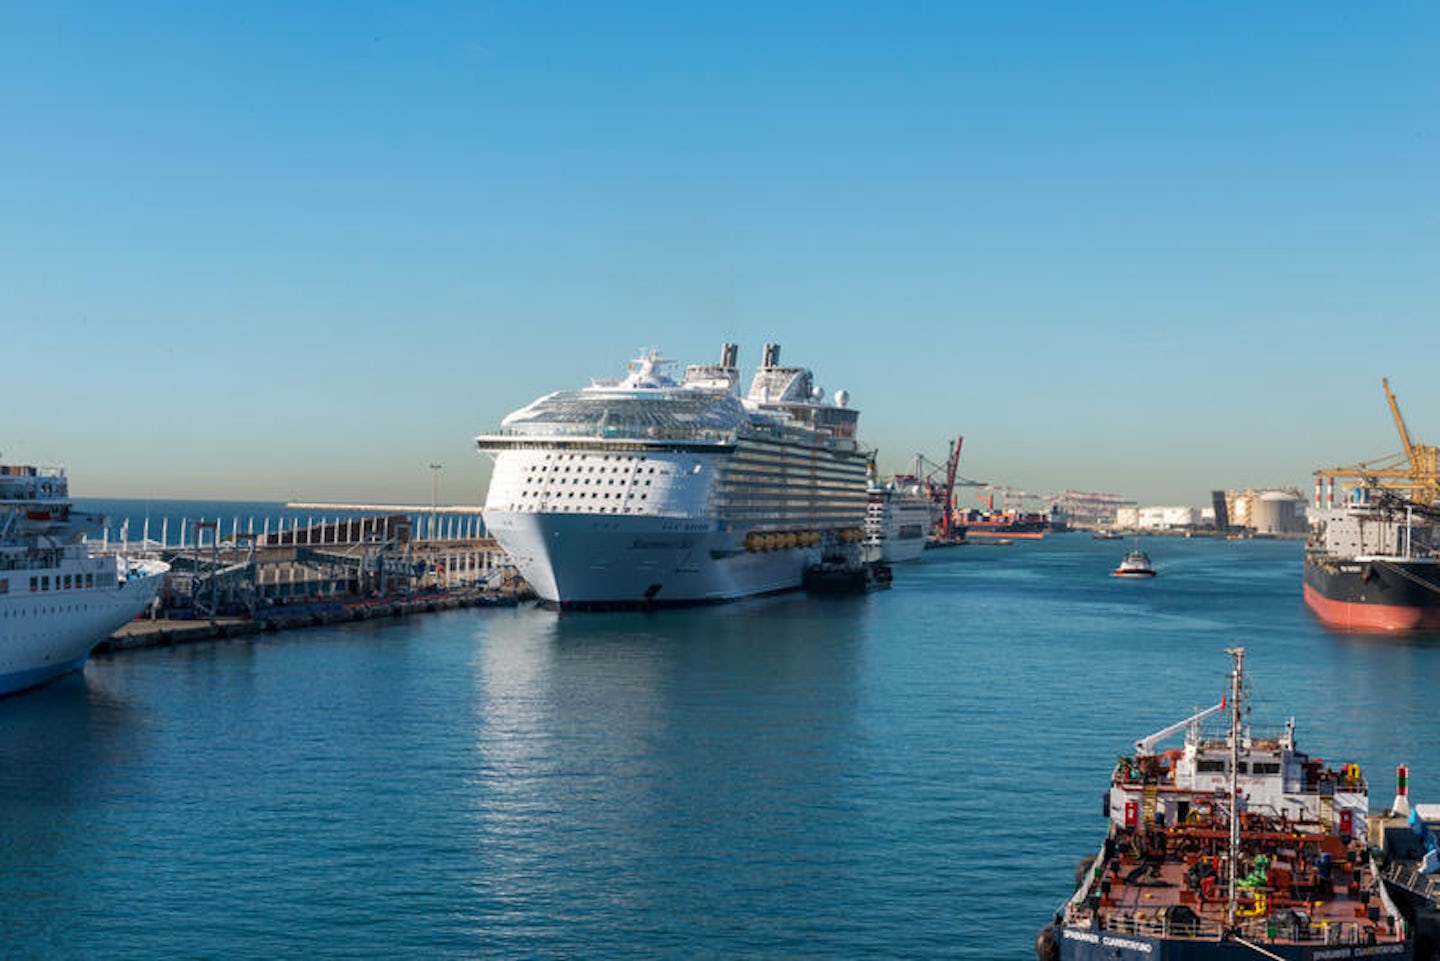 Barcelona Cruise Port